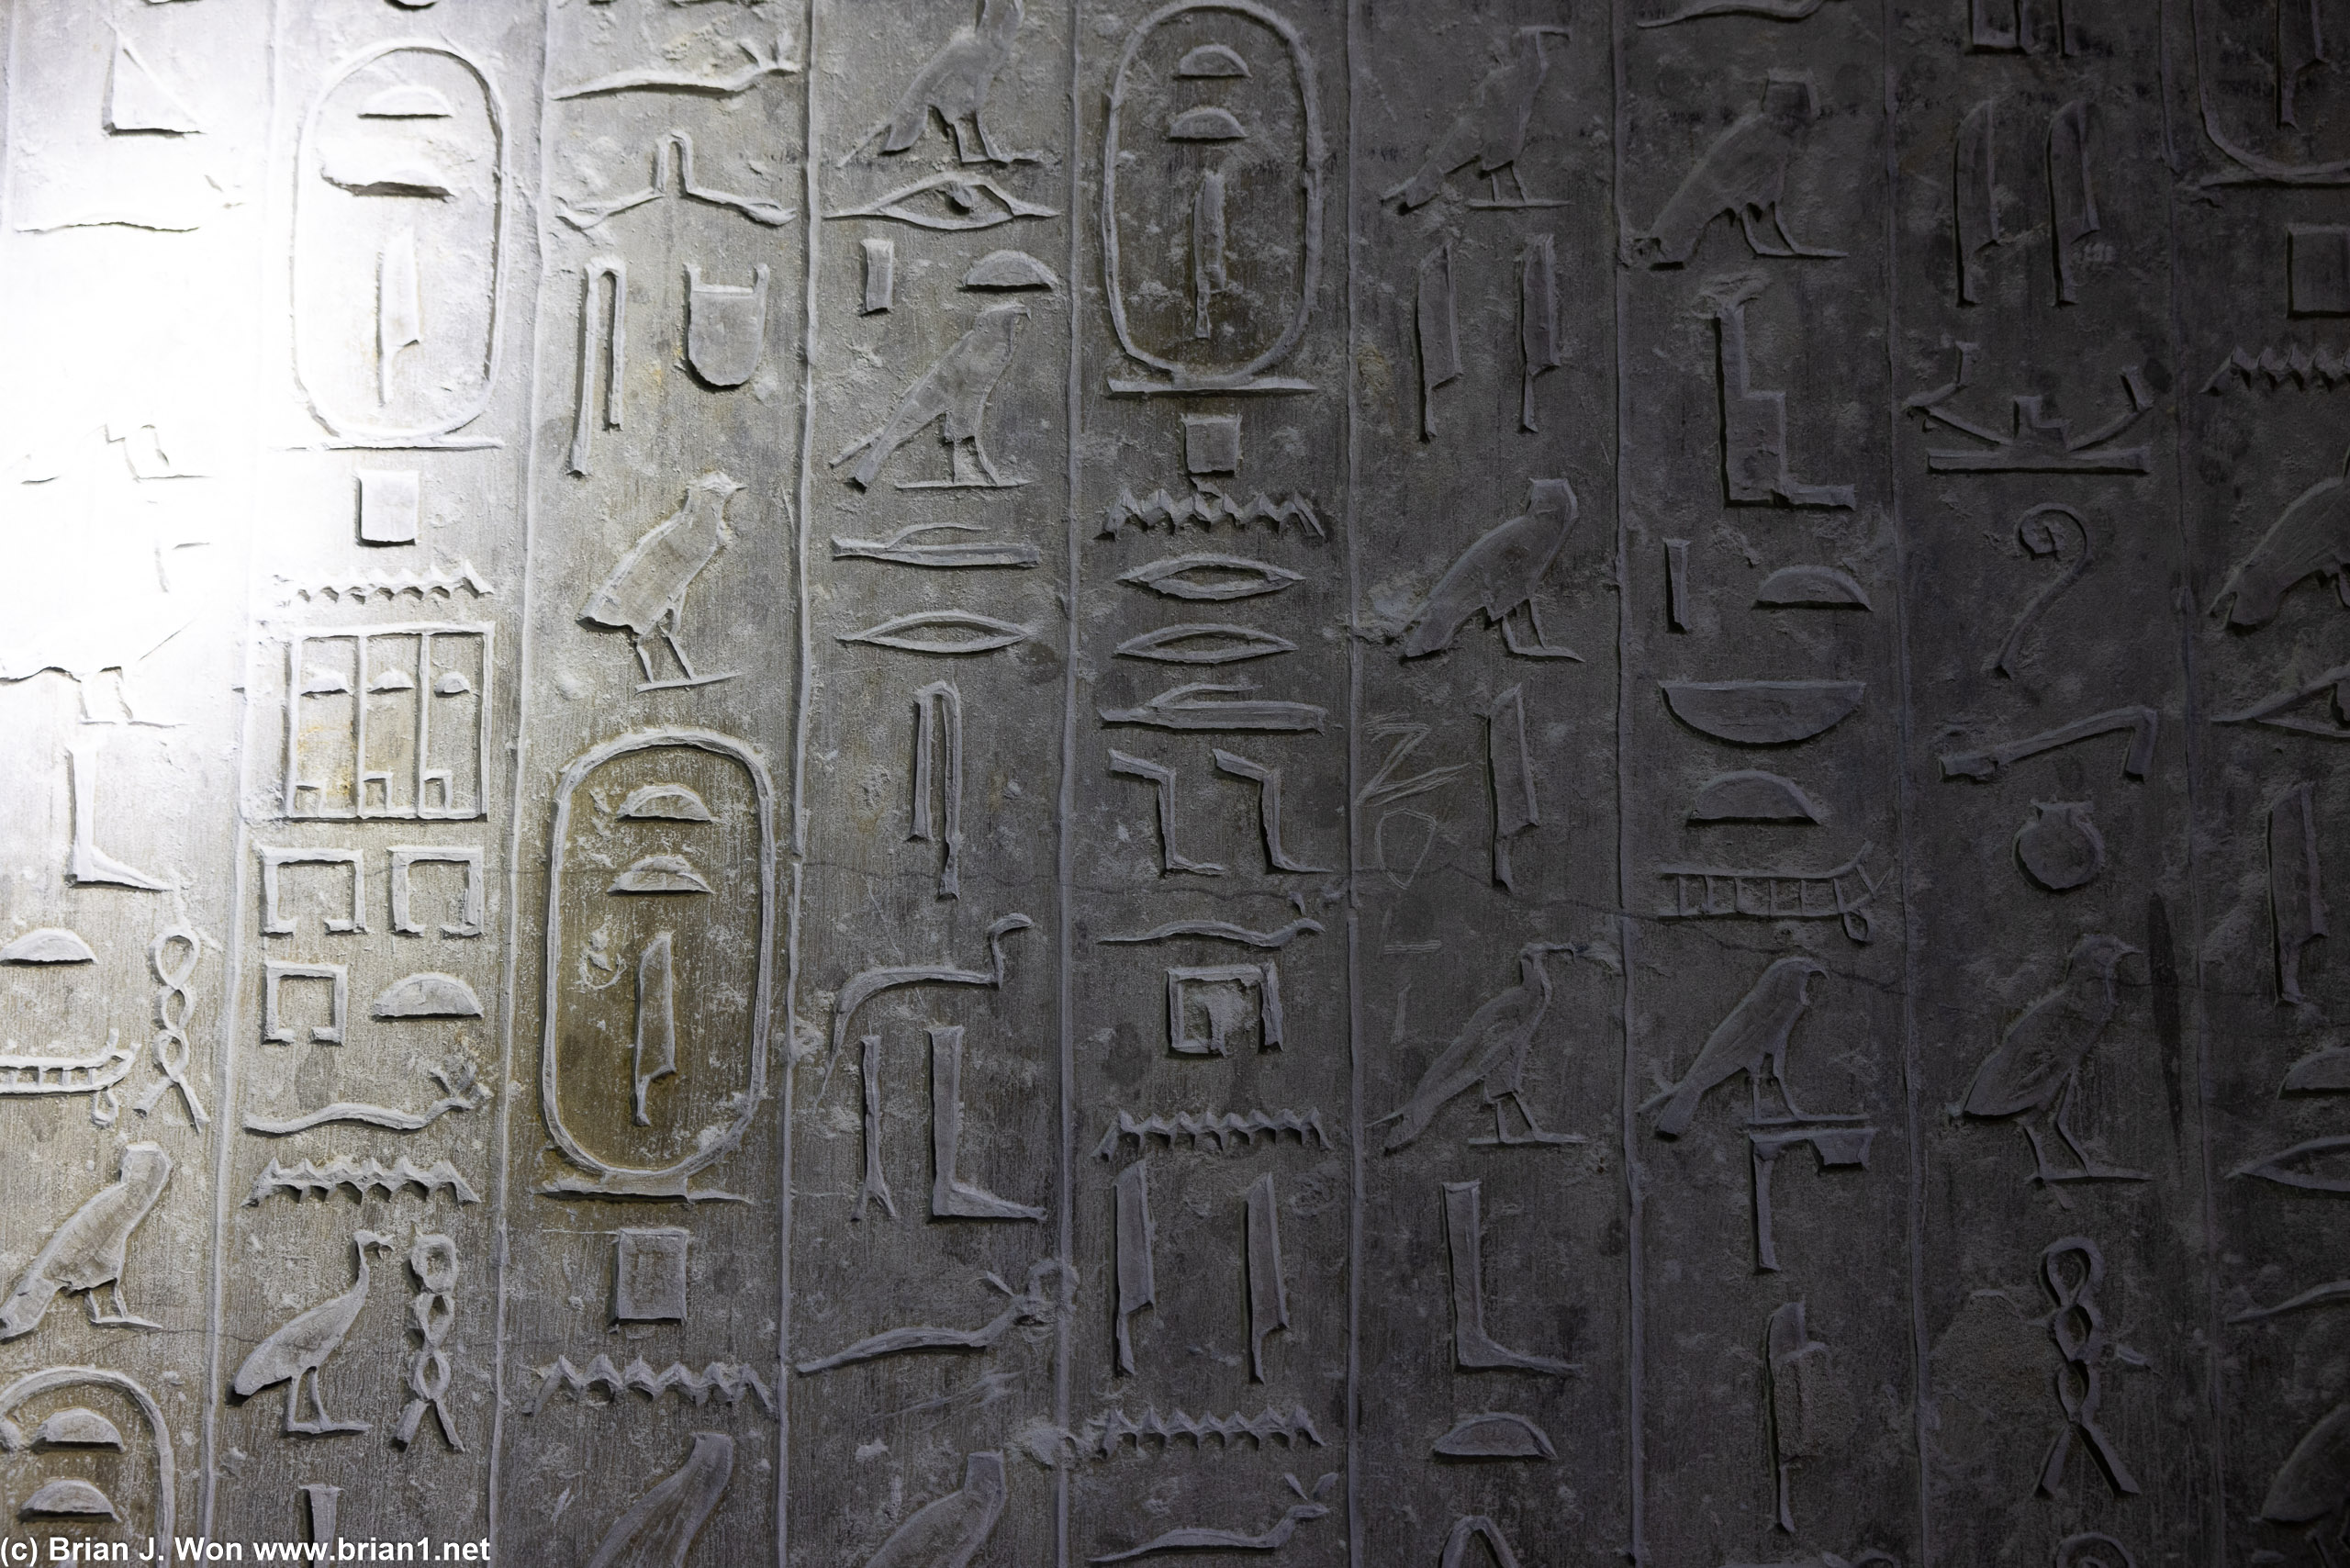 Many hieroglyphs adorn the walls.